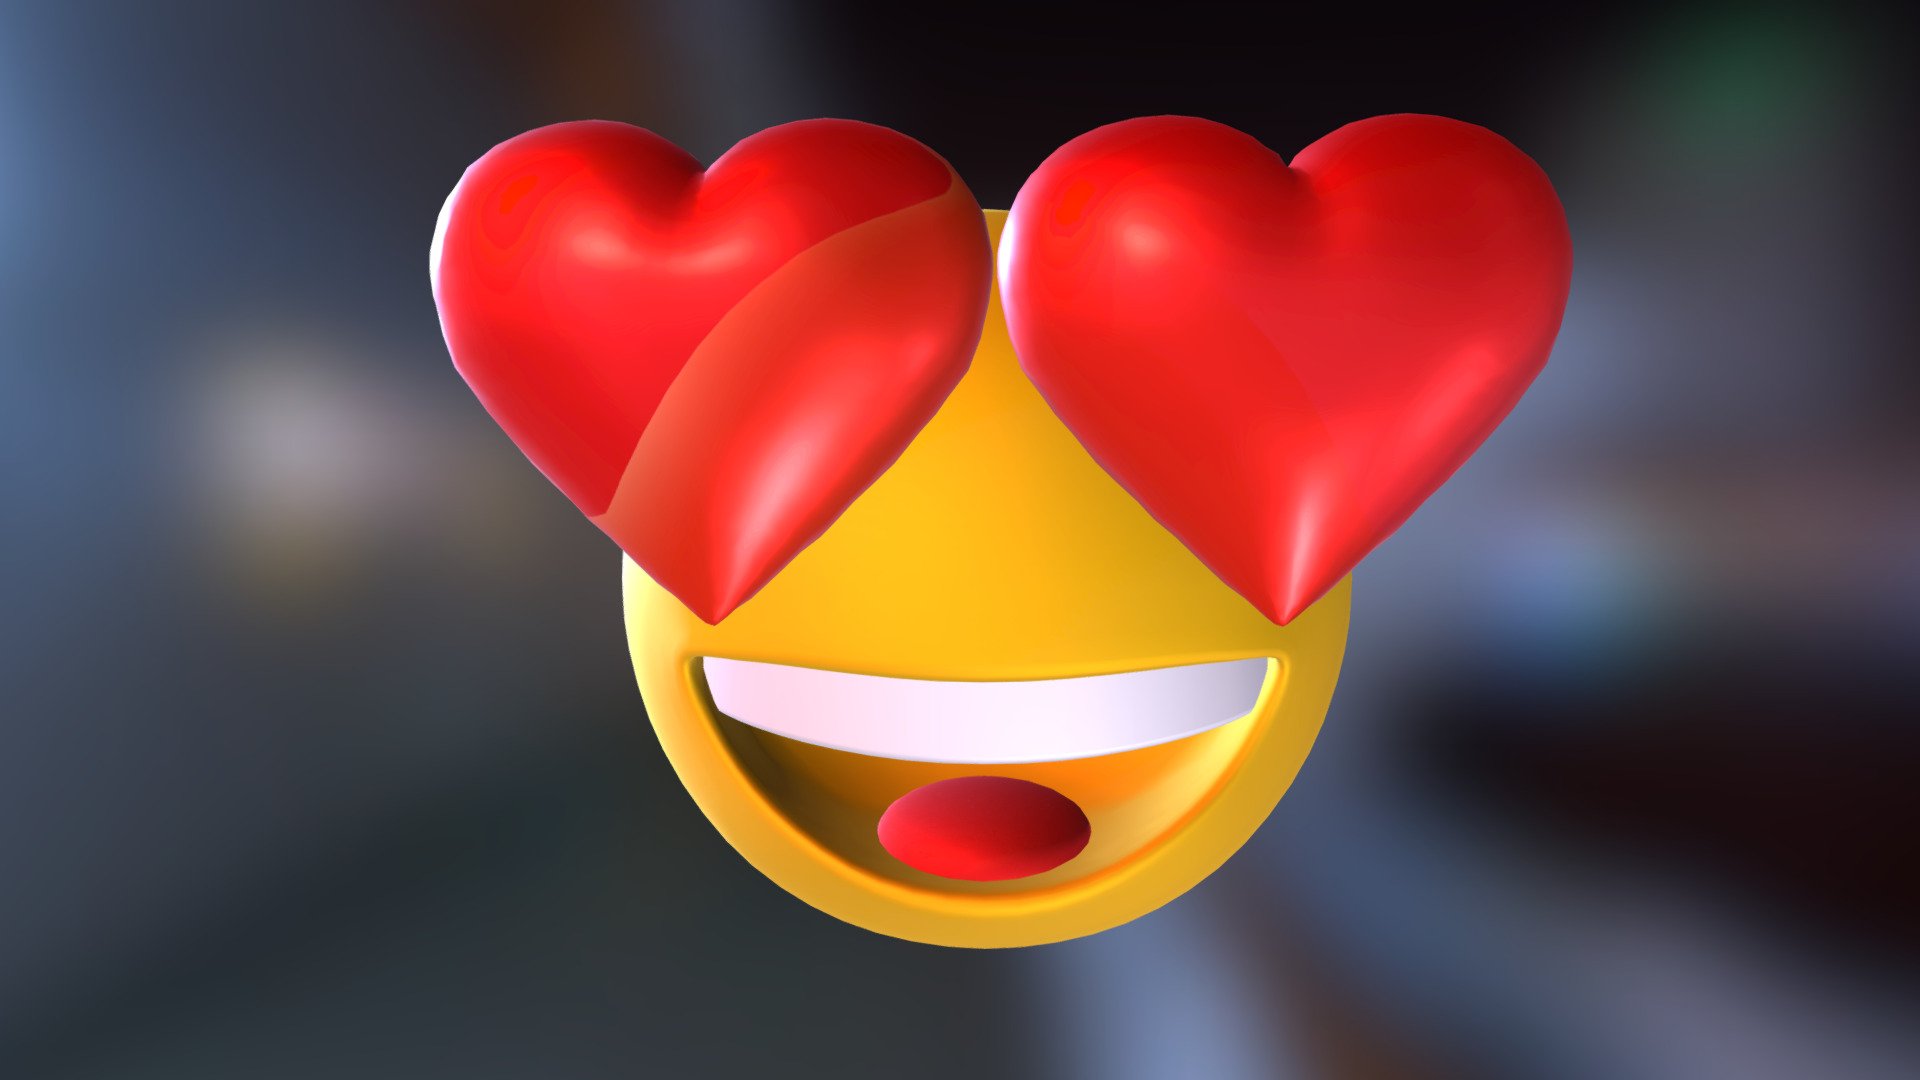 Emoji in love
https://www.youtube.com/watch?v=NNC0kIzM1Fo
Emoji in love (animated beating heart) free - Emoji in love (animated beating heart) free - Download Free 3D model by vmmaniac 3d model